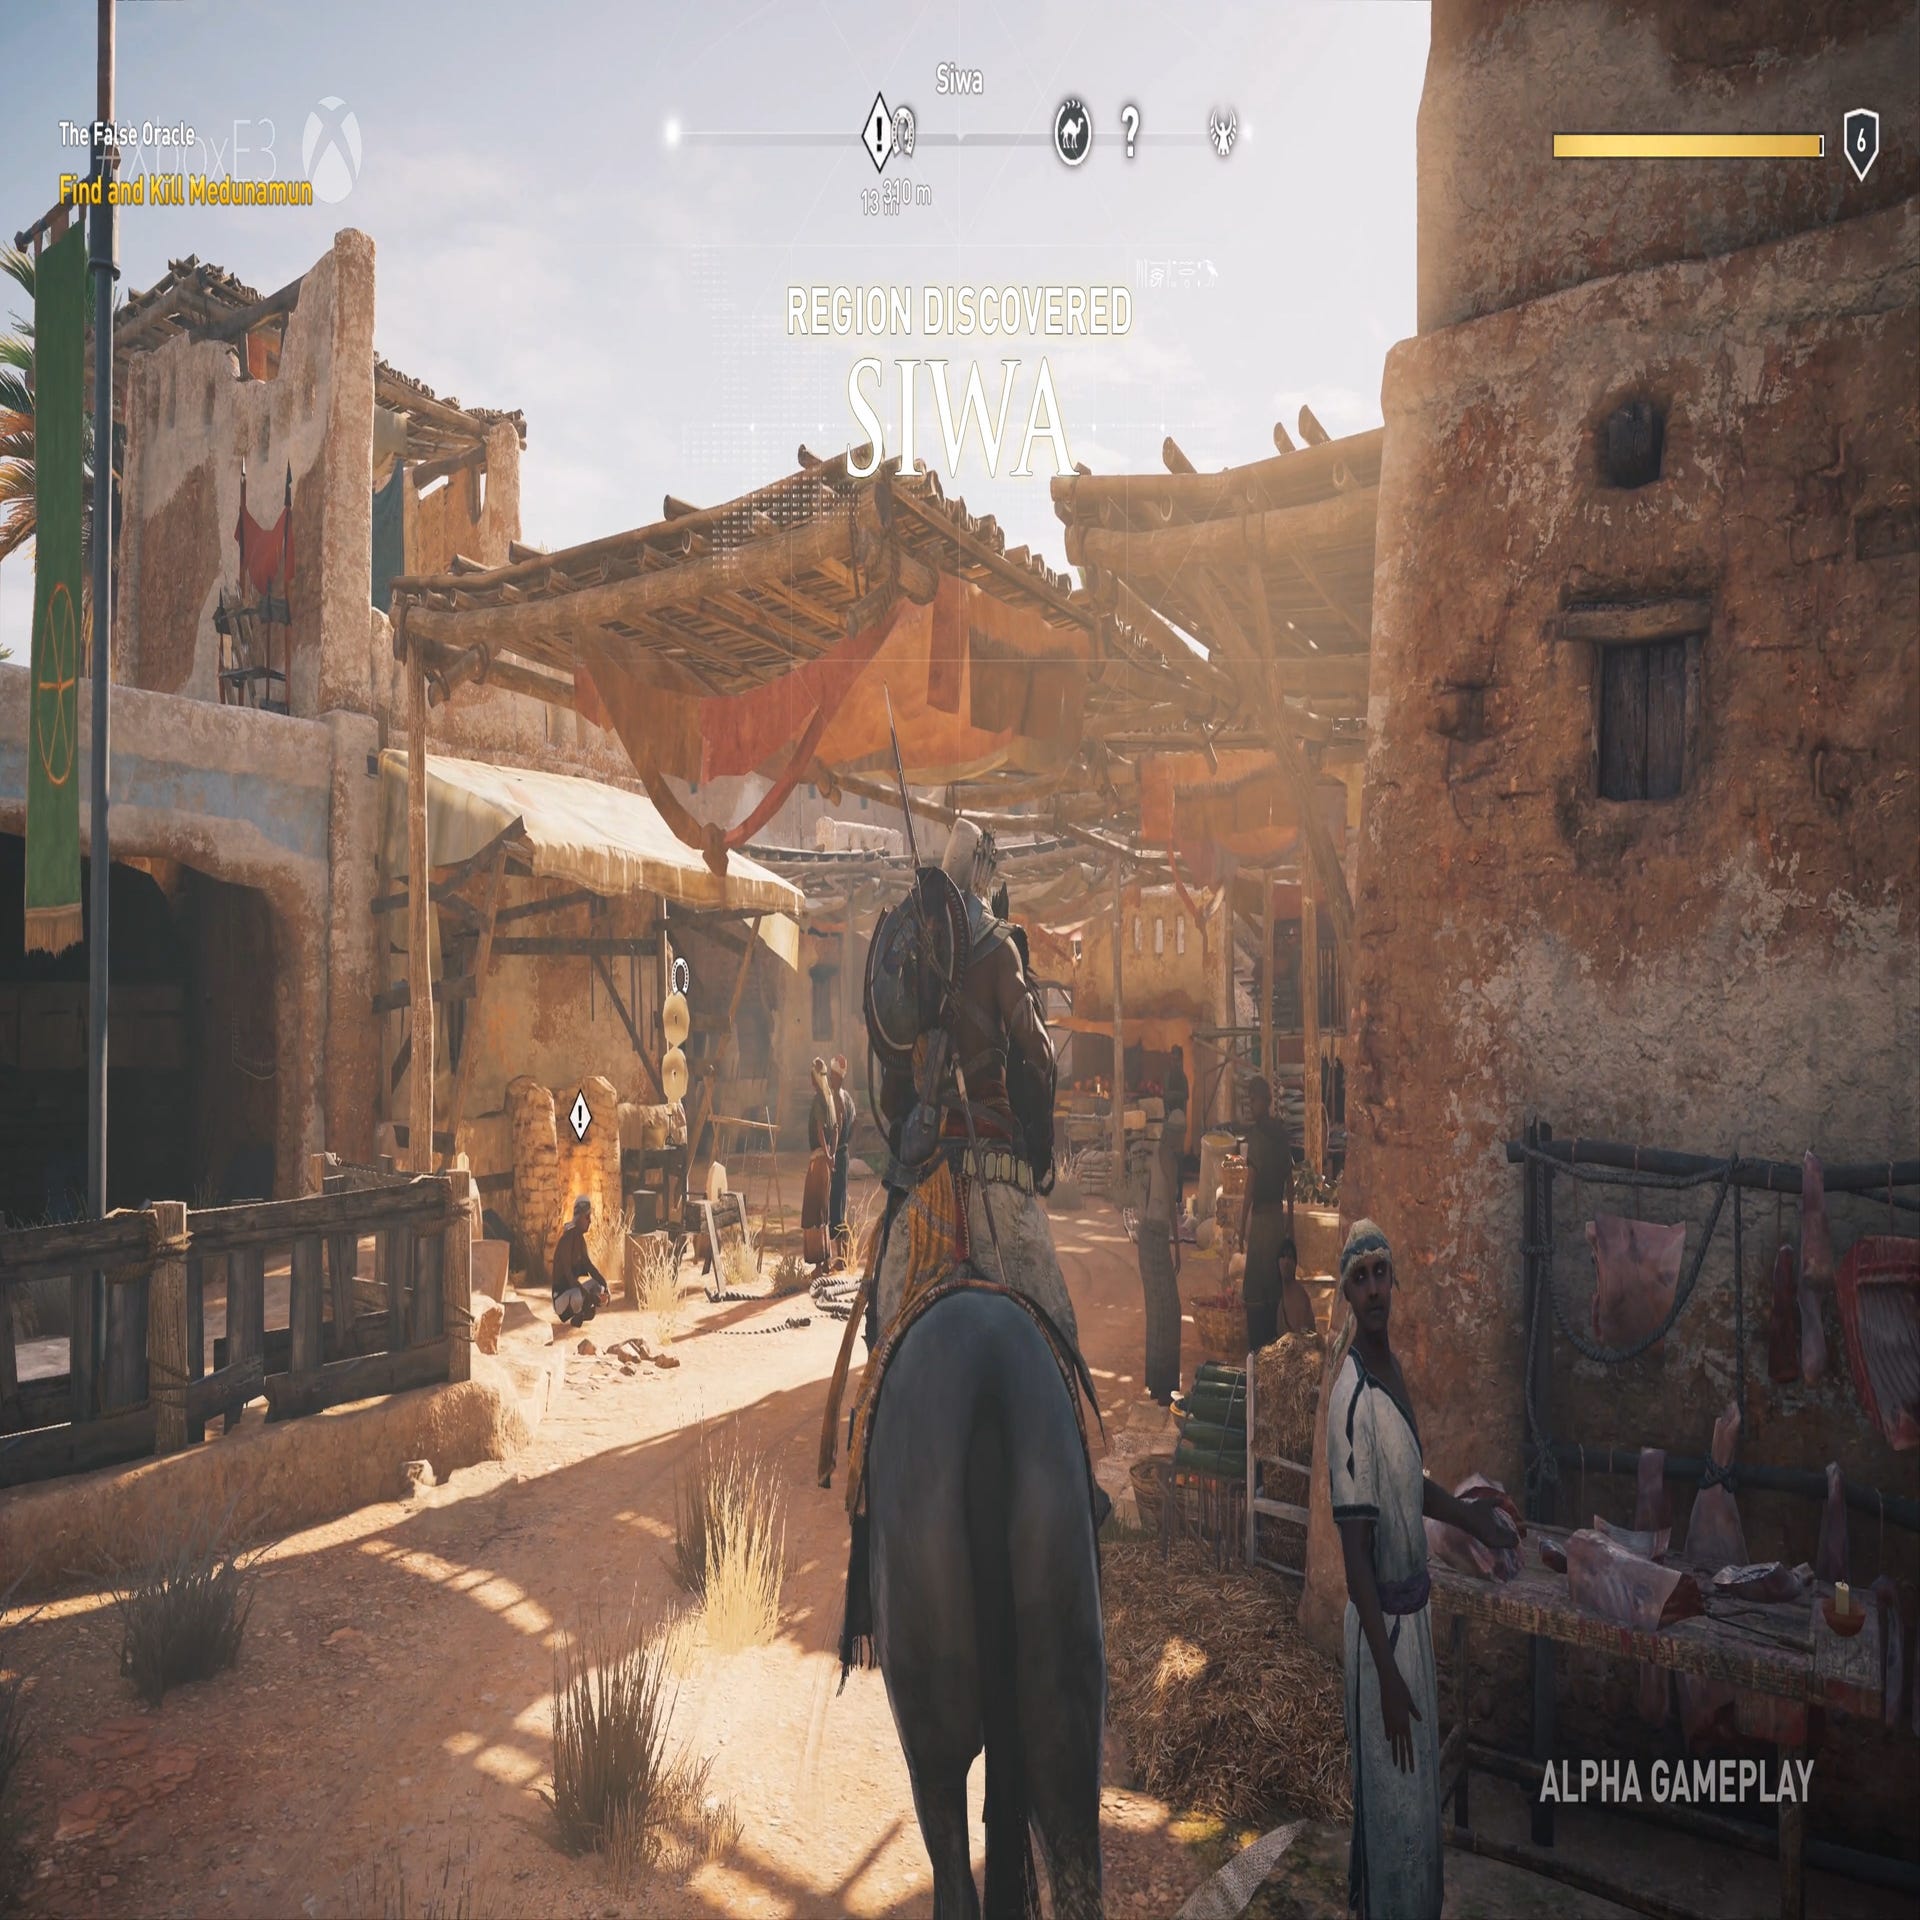 Assassins Creed Origins [60FPS Update] Xbox Series X Gameplay 4K 